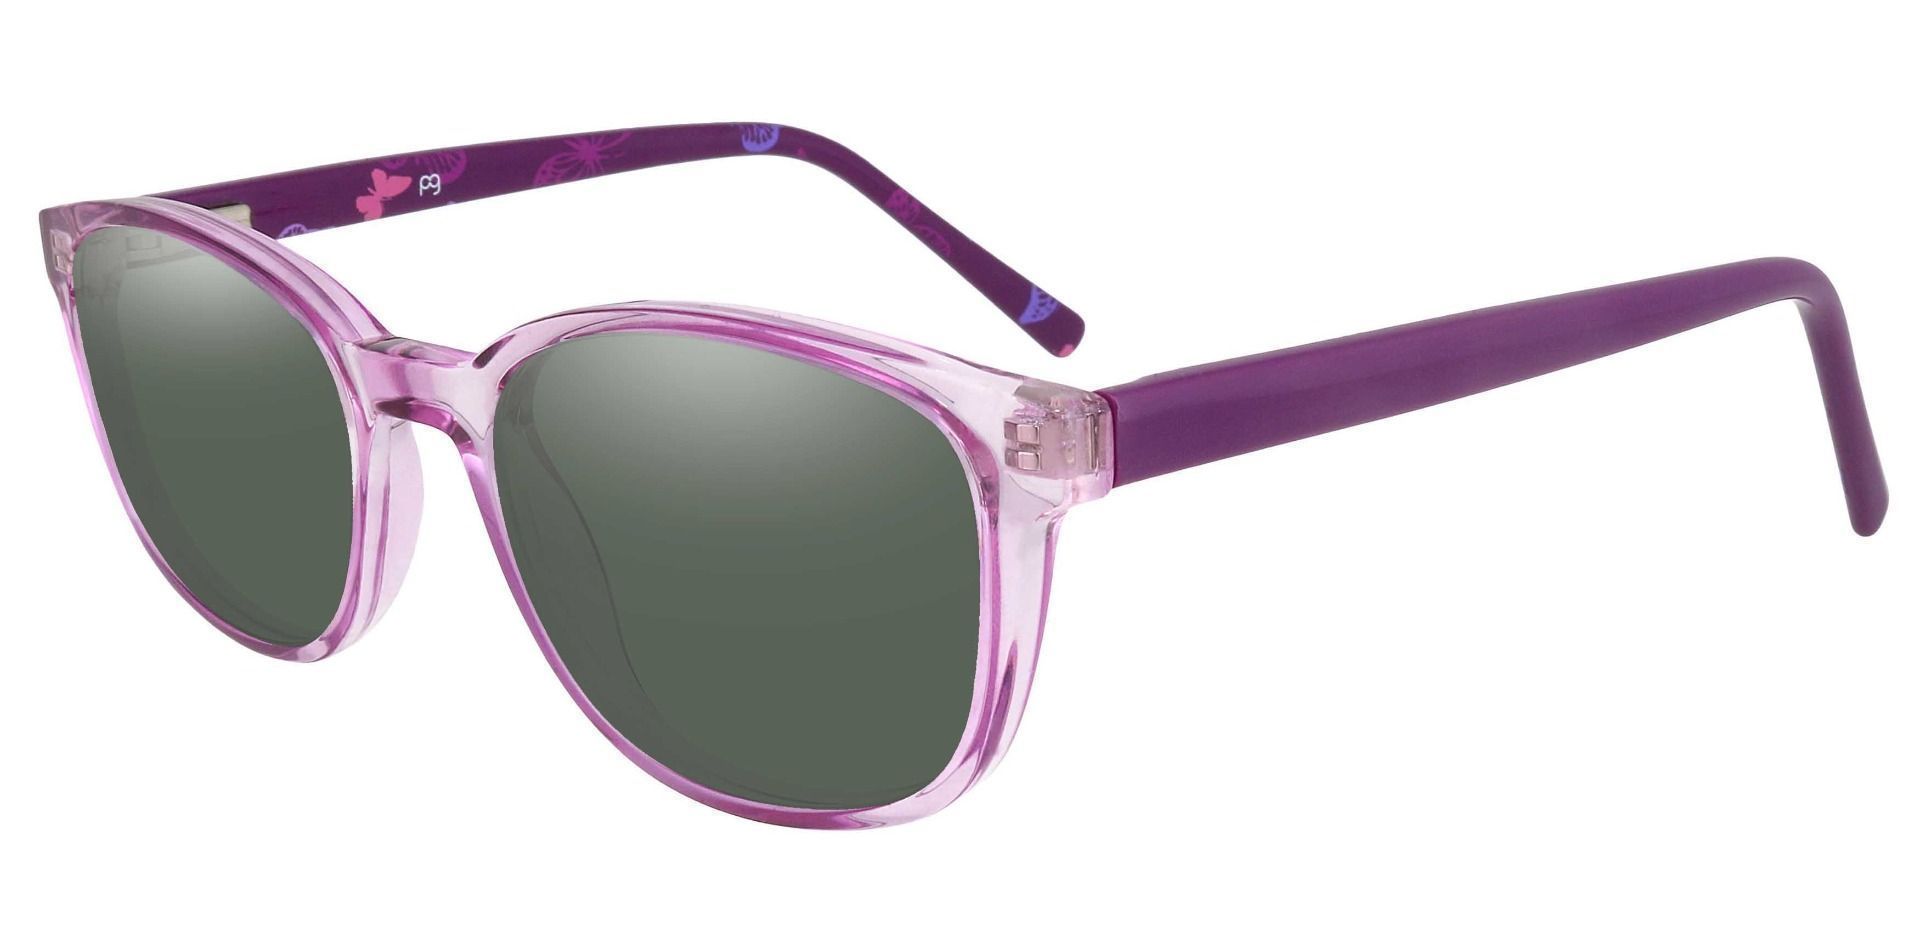 Branson Rectangle Prescription Sunglasses - Purple Frame With Green Lenses